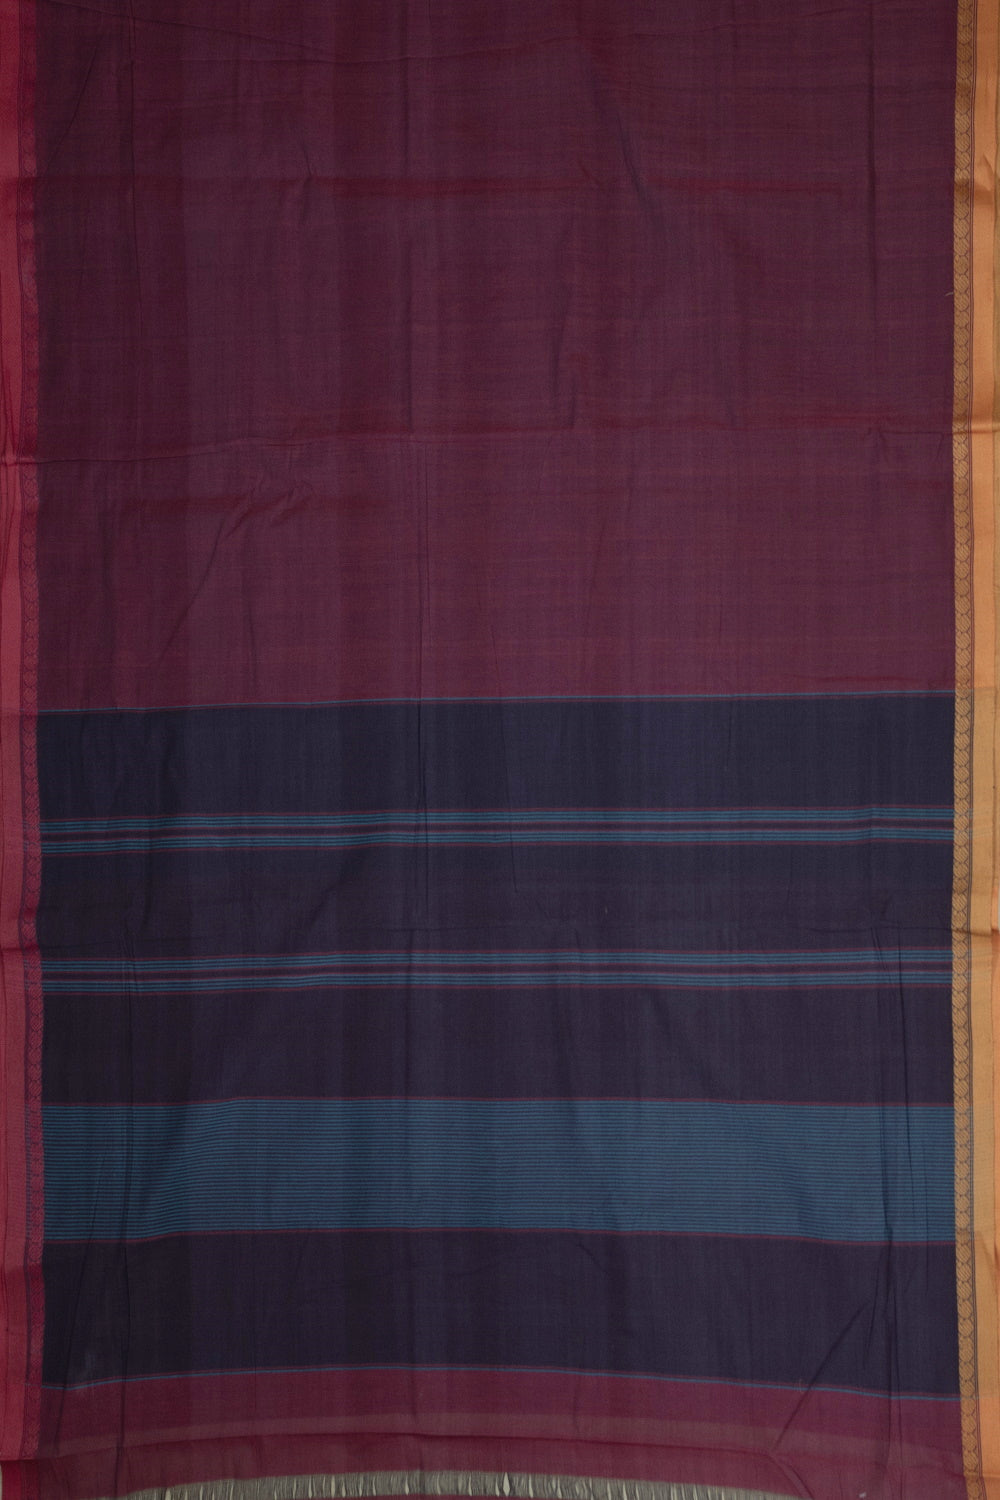 Dual Shaded Maroon Handwoven Cotton saree